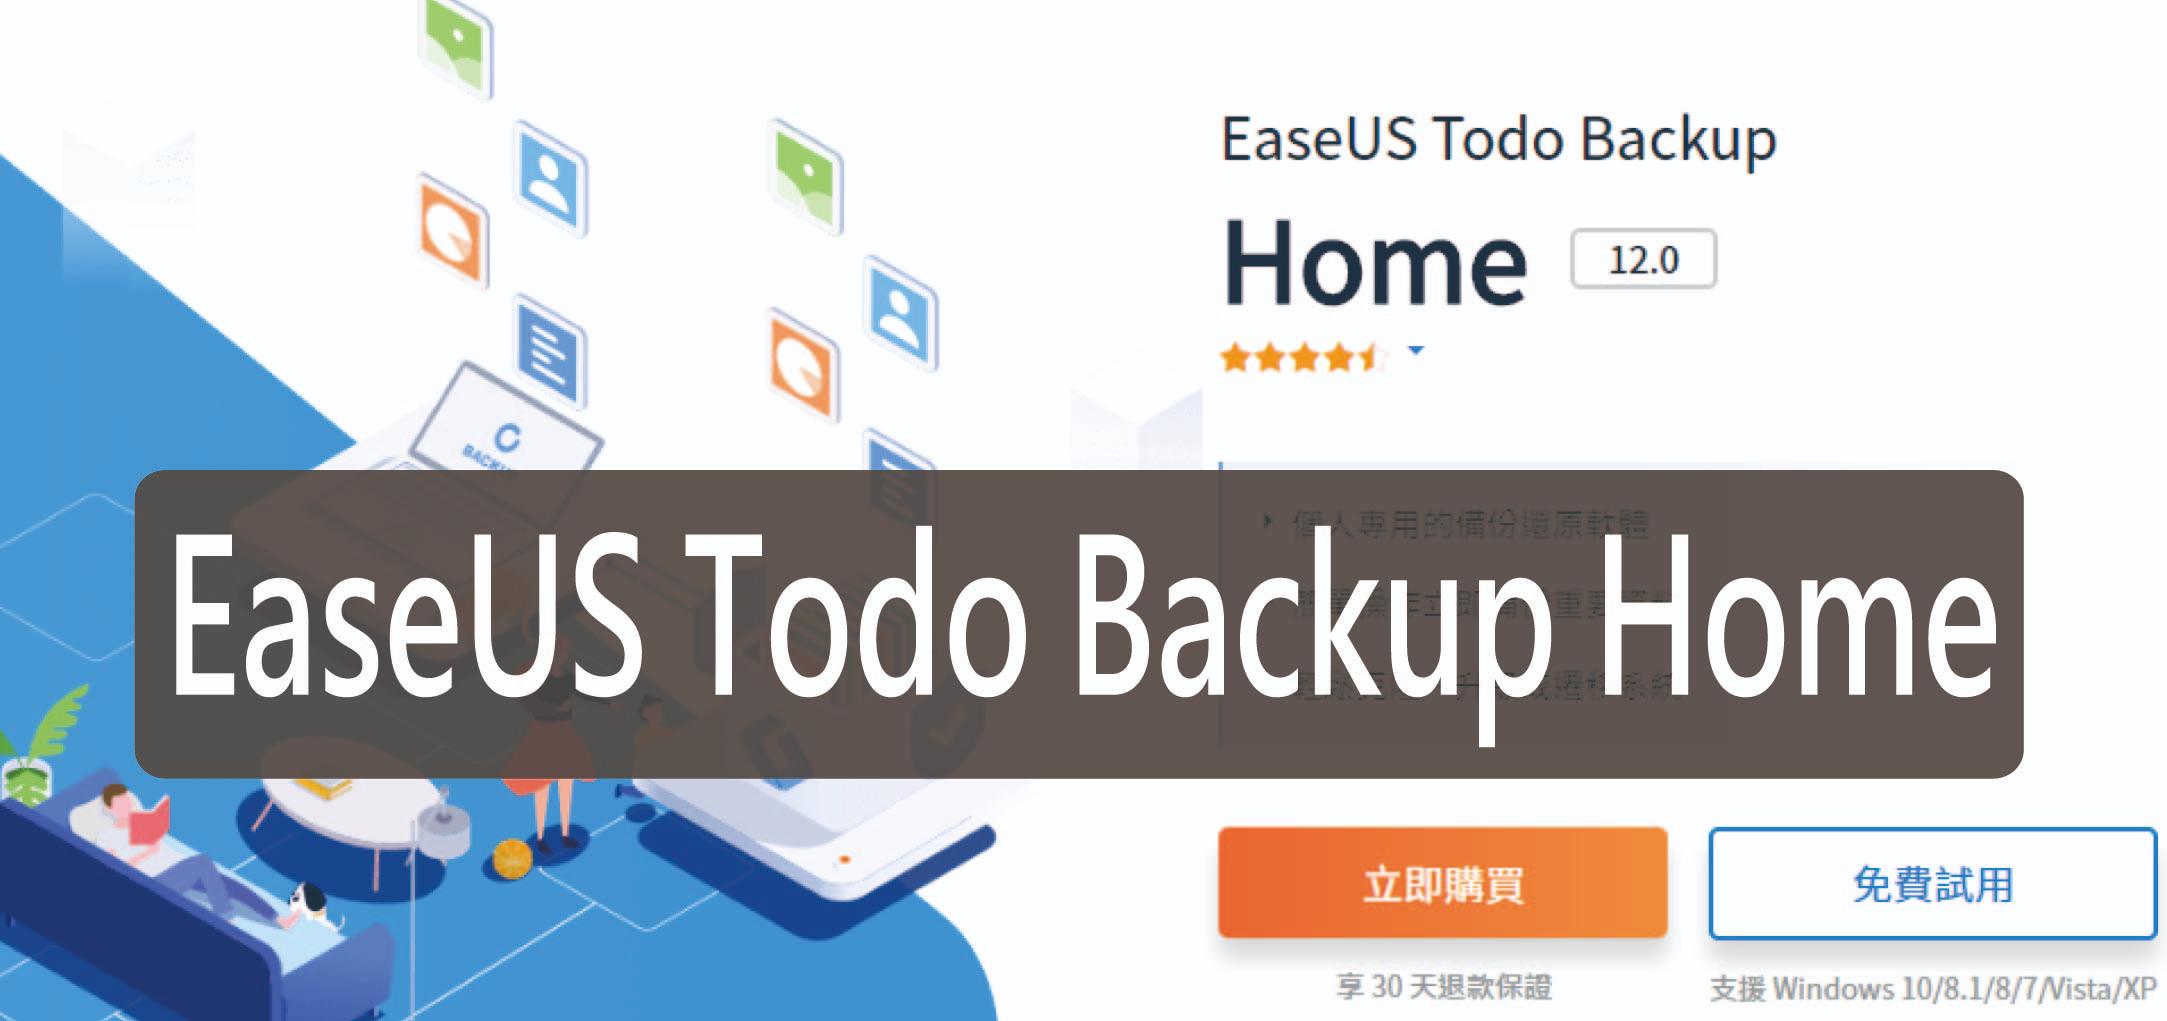 EaseUS Todo Backup Home,免費備份與還原軟體 系統還原好方便 | 免費軟體推薦